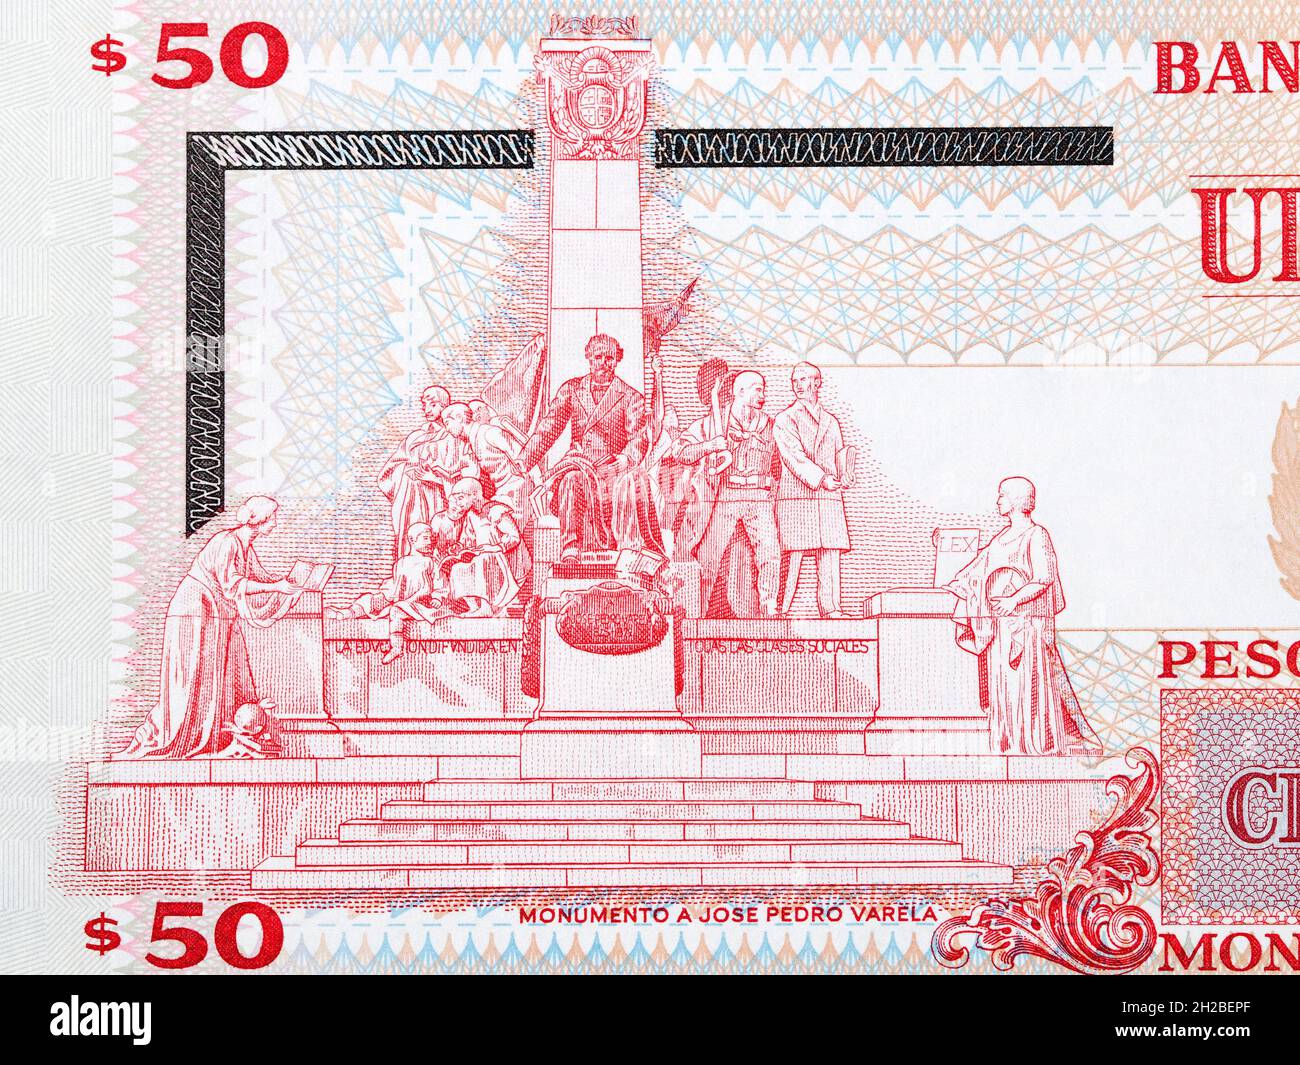 Jose Pedro Varela monument from Uruguayan money Stock Photo